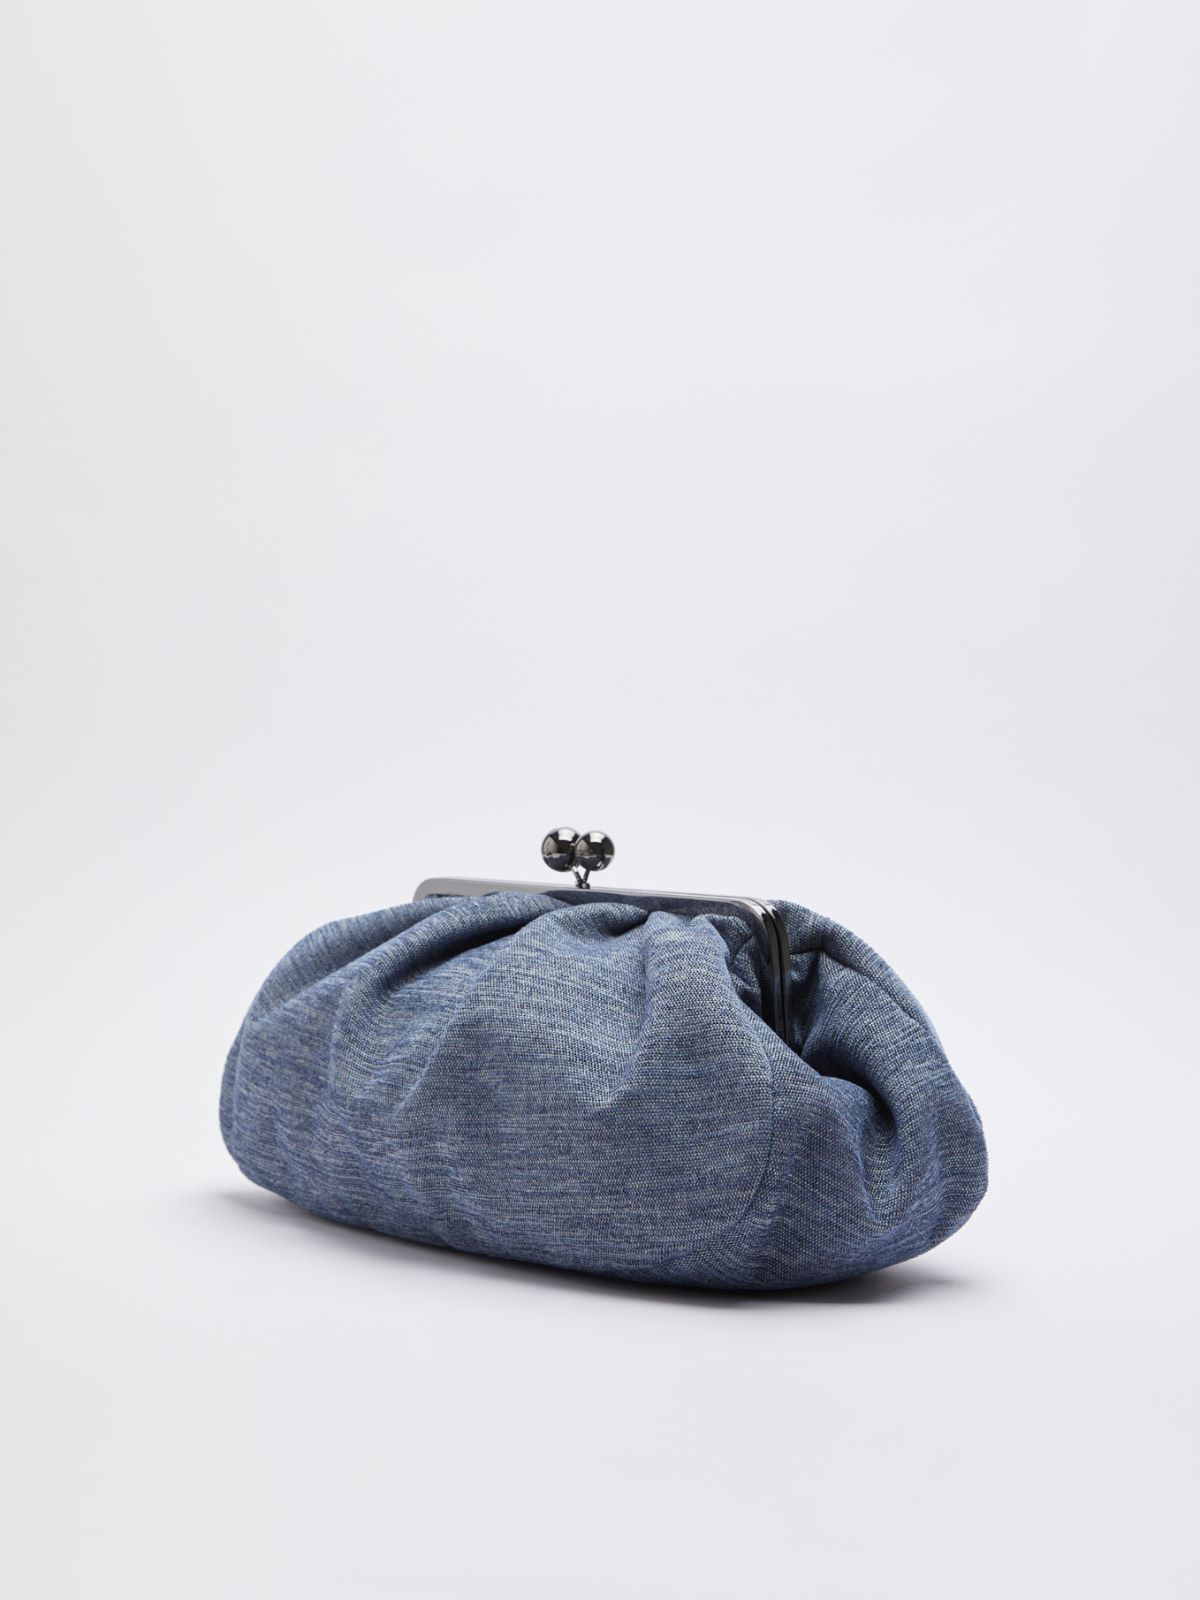 Large Pasticcino Bag in jacquard cotton  - AVIO - Weekend Max Mara - 2